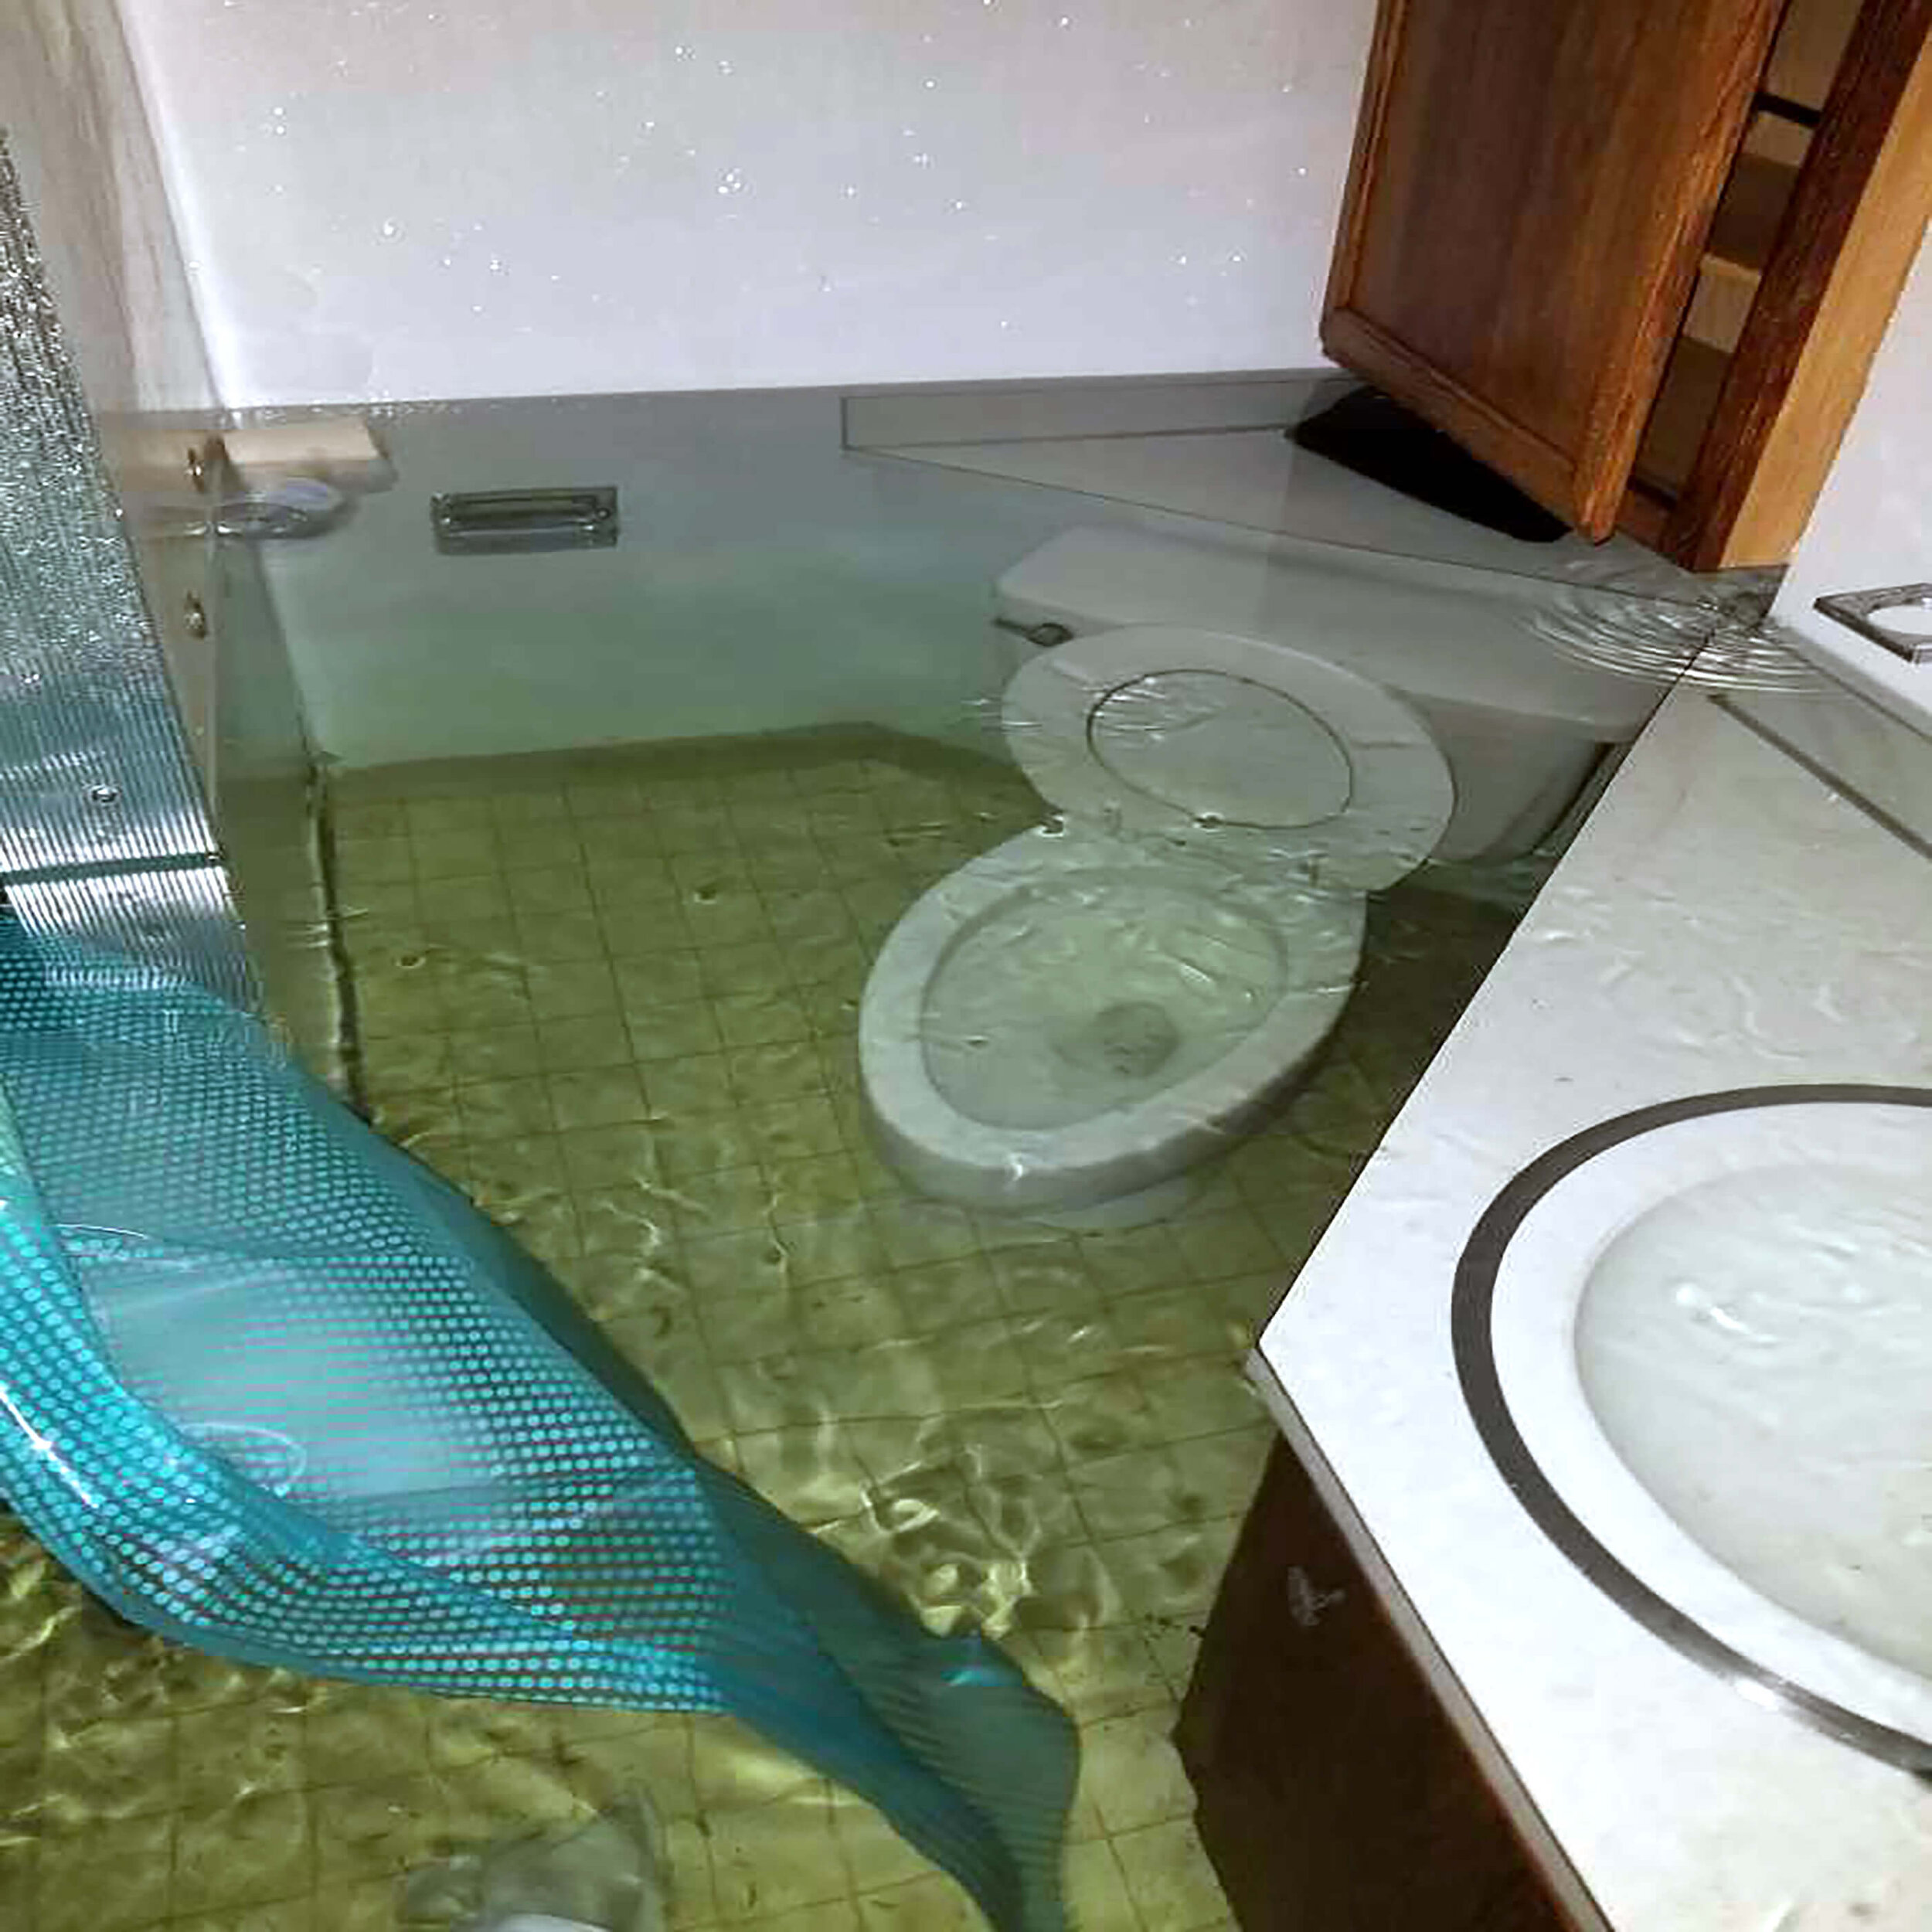 Vacant Apartment Flood